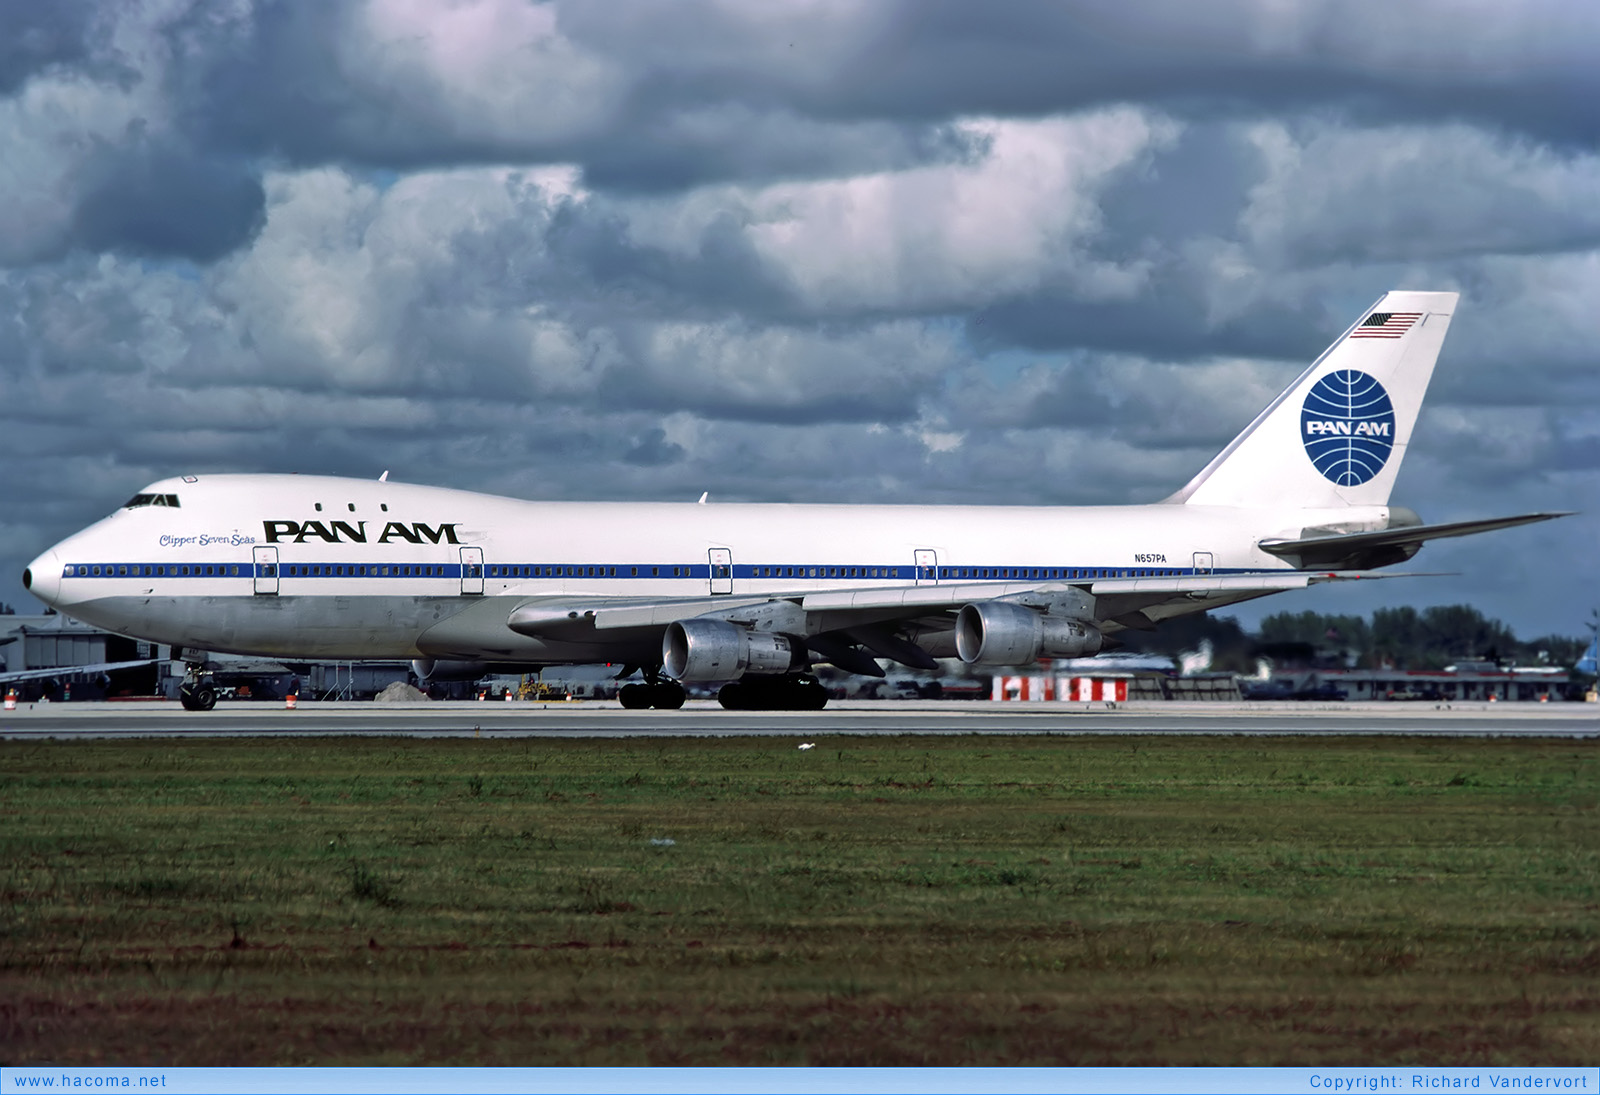 Photo of N657PA - Pan Am Clipper Arctic / Seven Seas - Miami International Airport - Nov 17, 1982